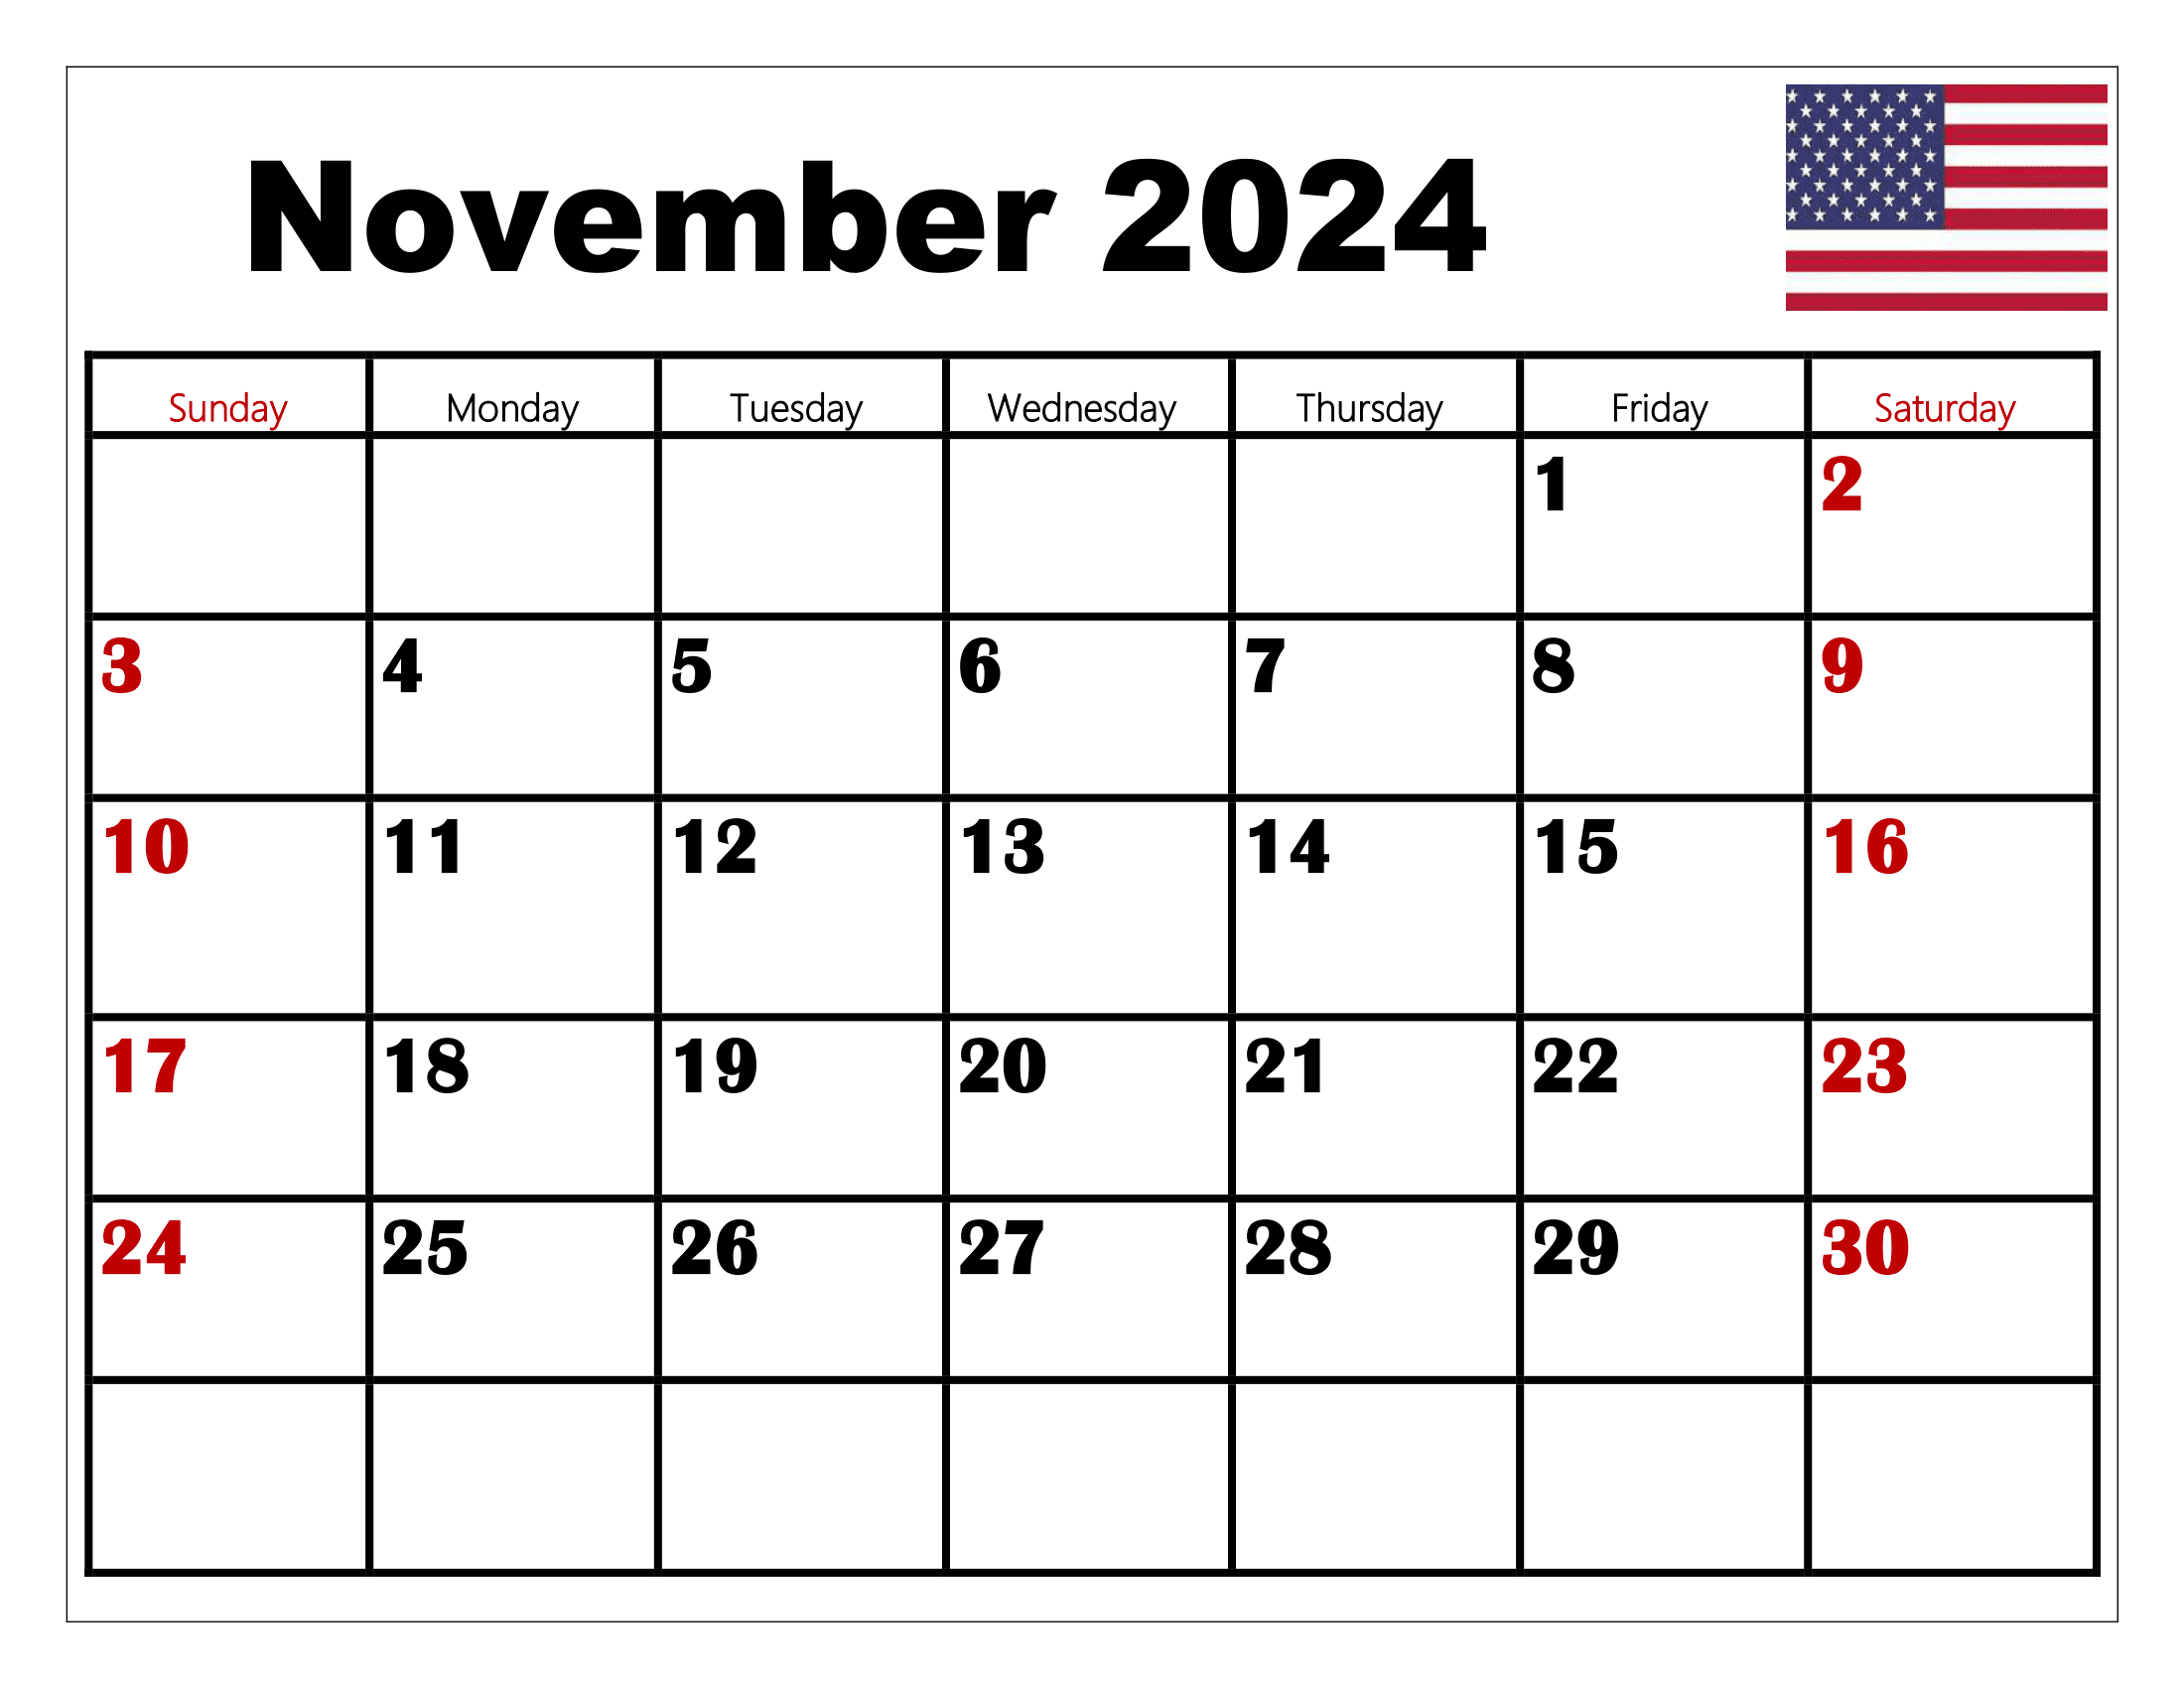 November 2024 Calendar Printable Pdf Template With Holidays for November 2024 Calendar Free Printable